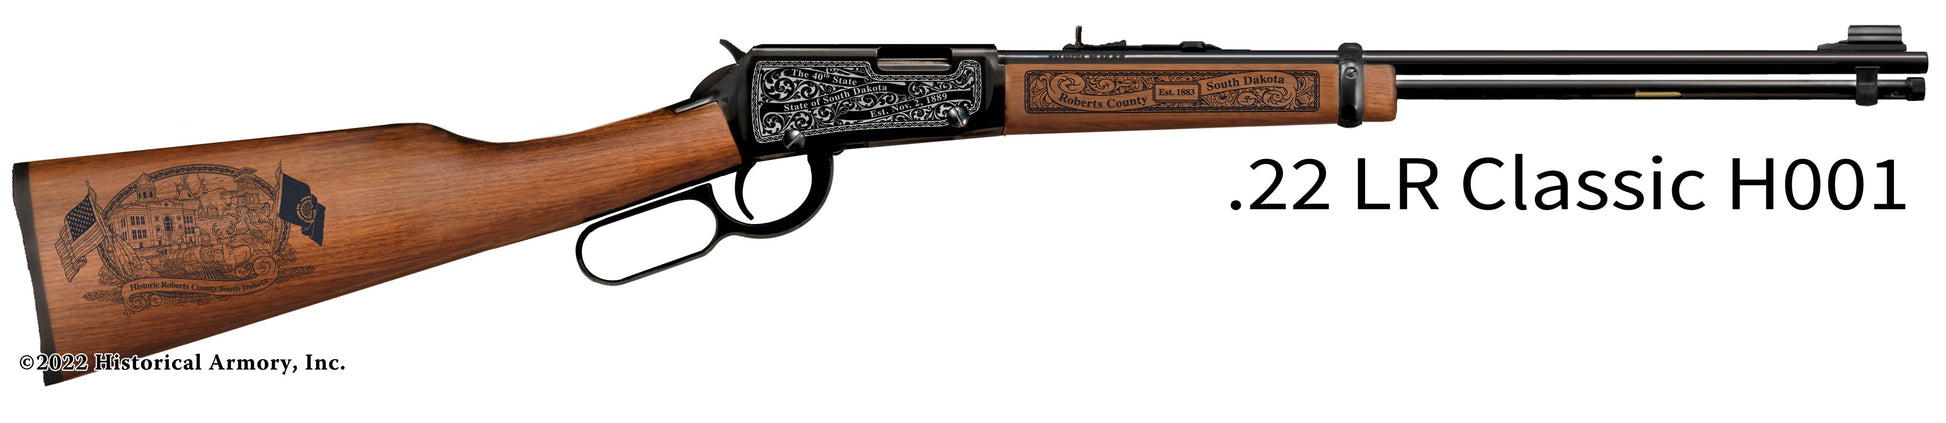 Roberts County South Dakota Engraved Henry H001 Rifle